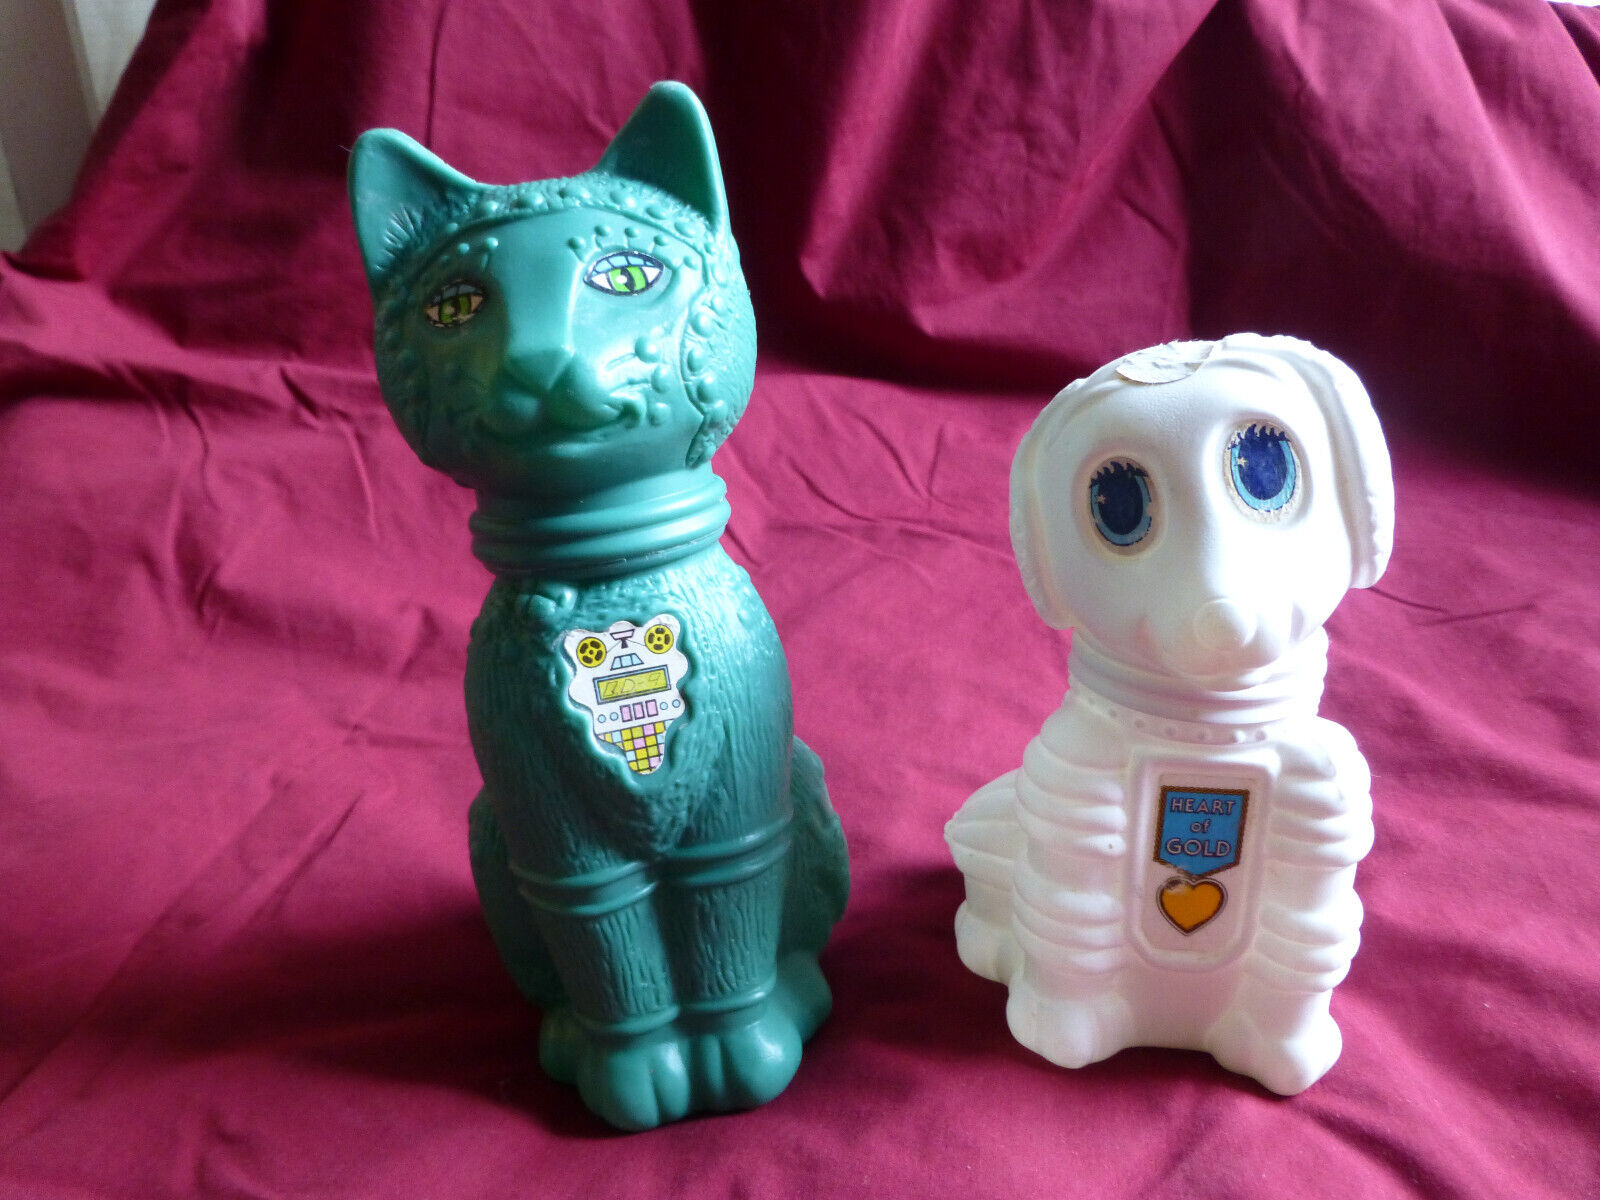 Robot dog (Heart of Gold) and cat (QD-9) soakies, empty, scuffed